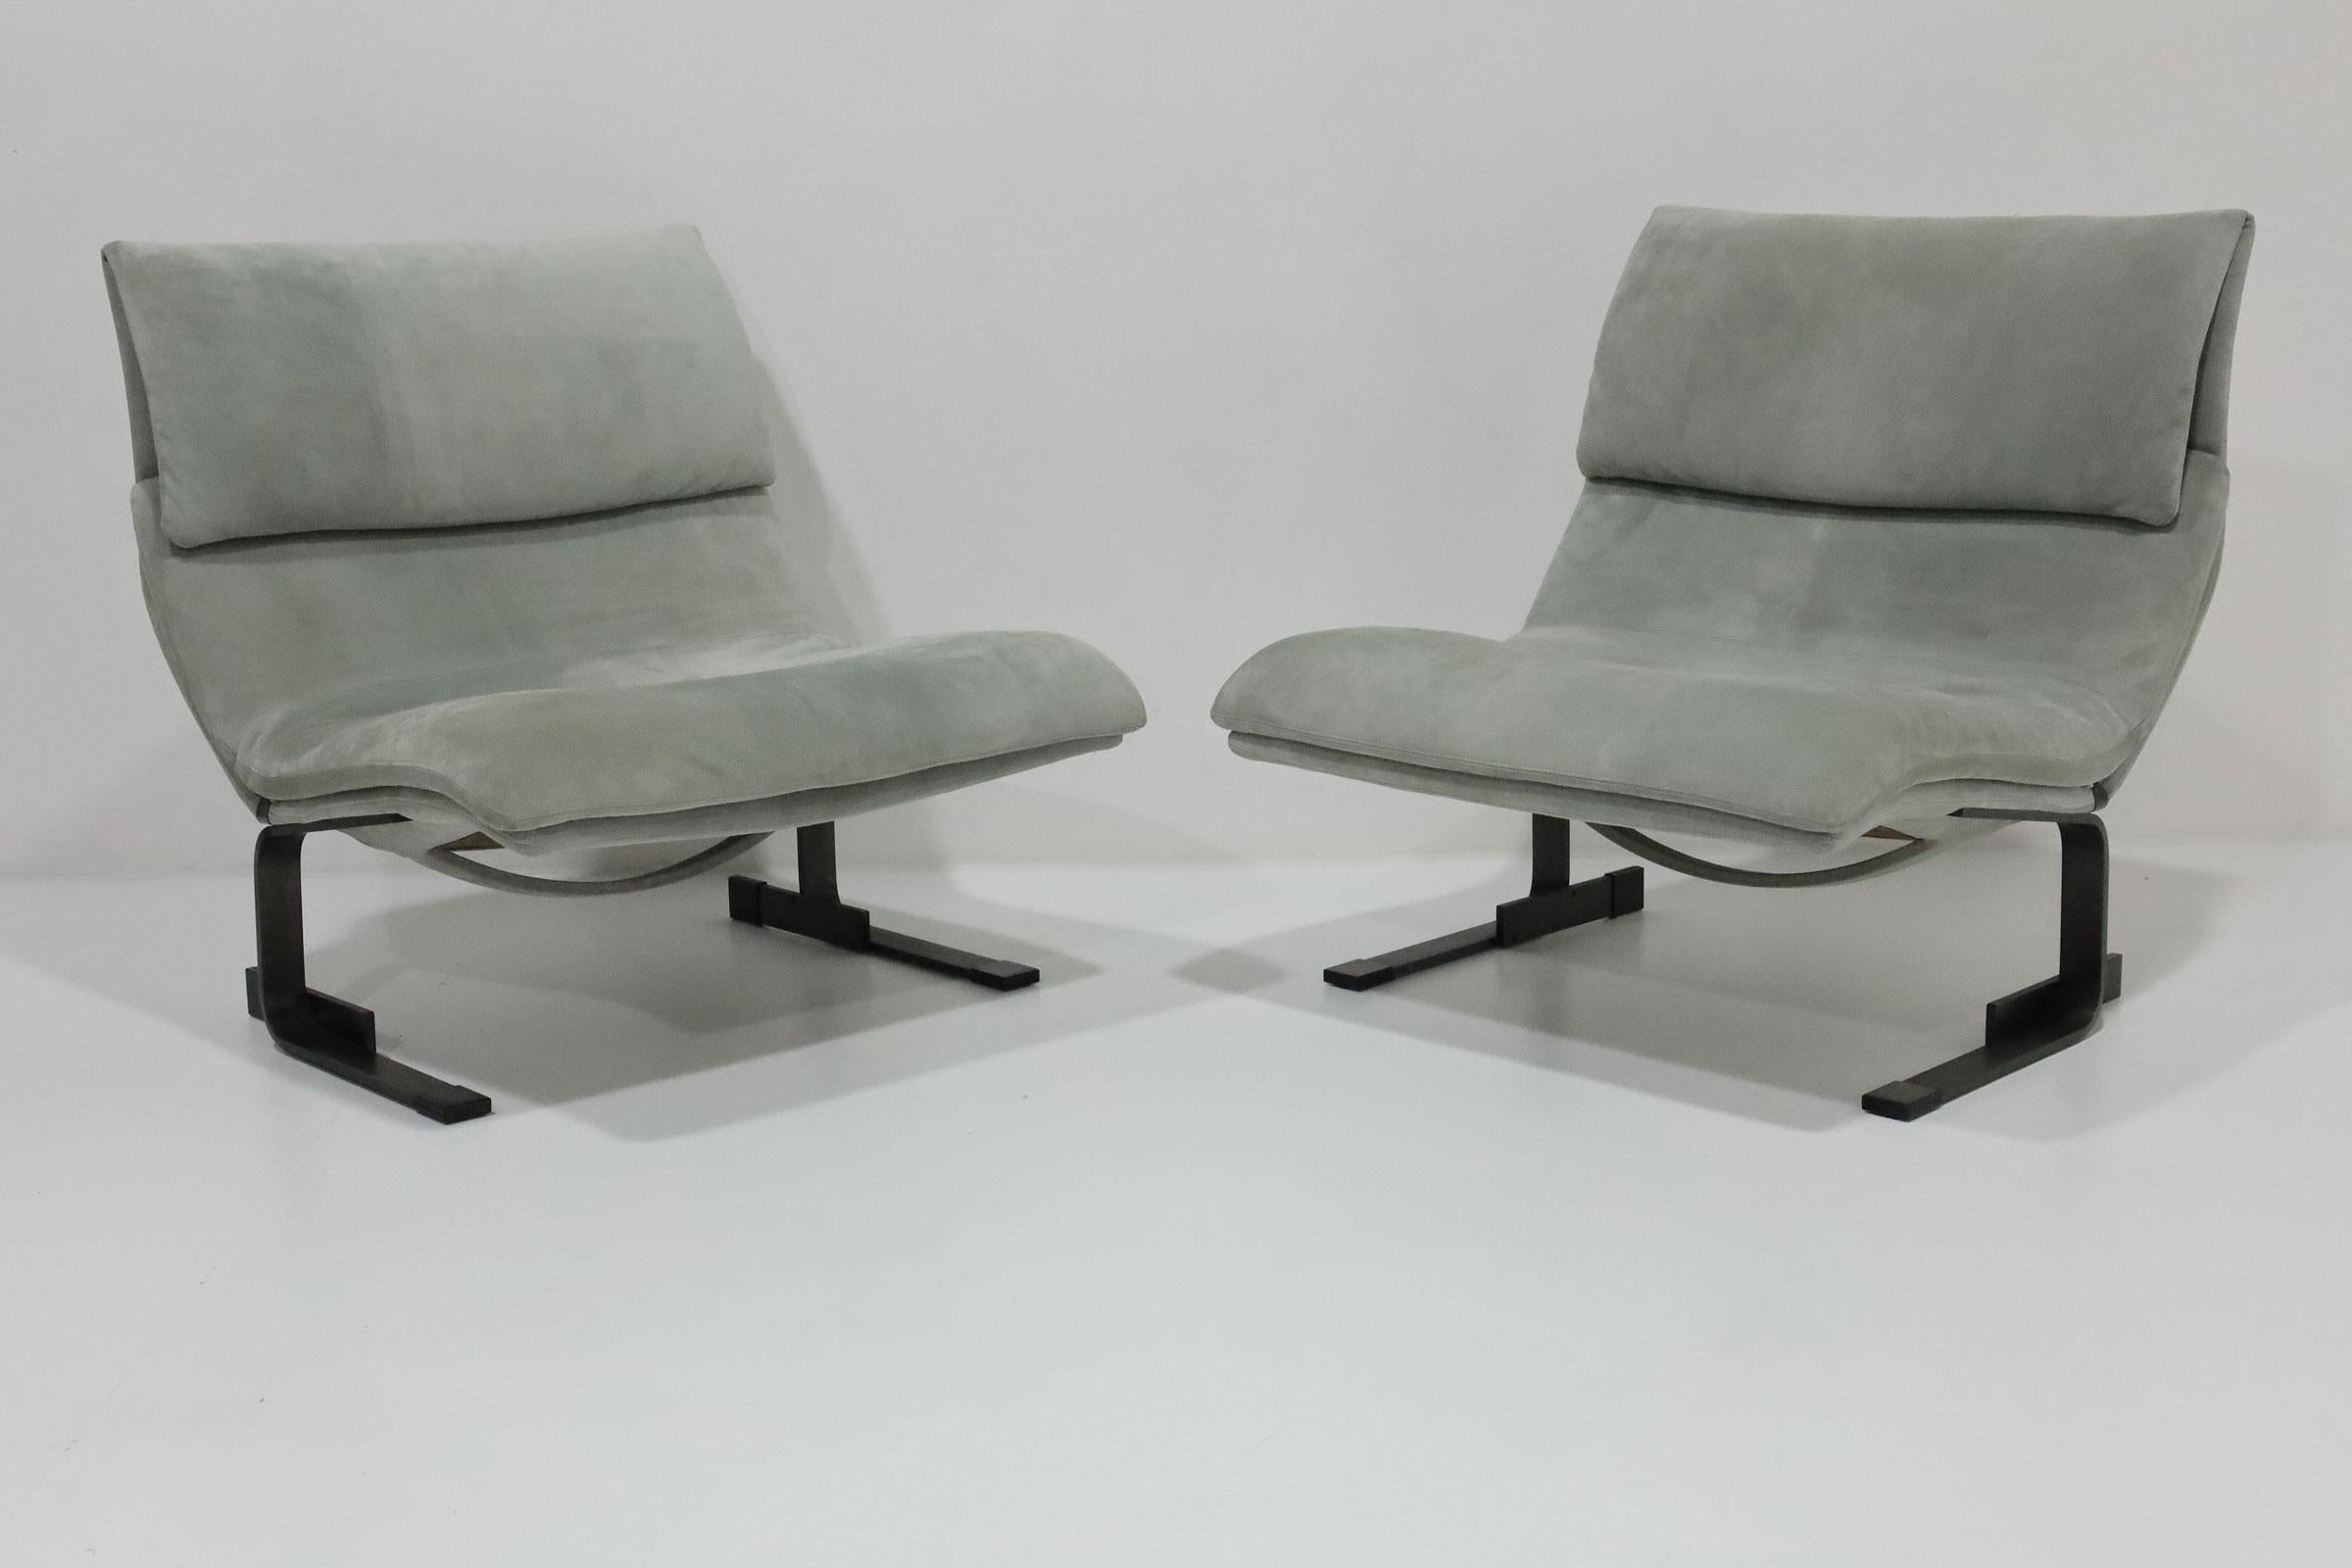 Metal Giovanni Offredi for Saporiti Onda Wave Chairs in Gray Suede and Bronze